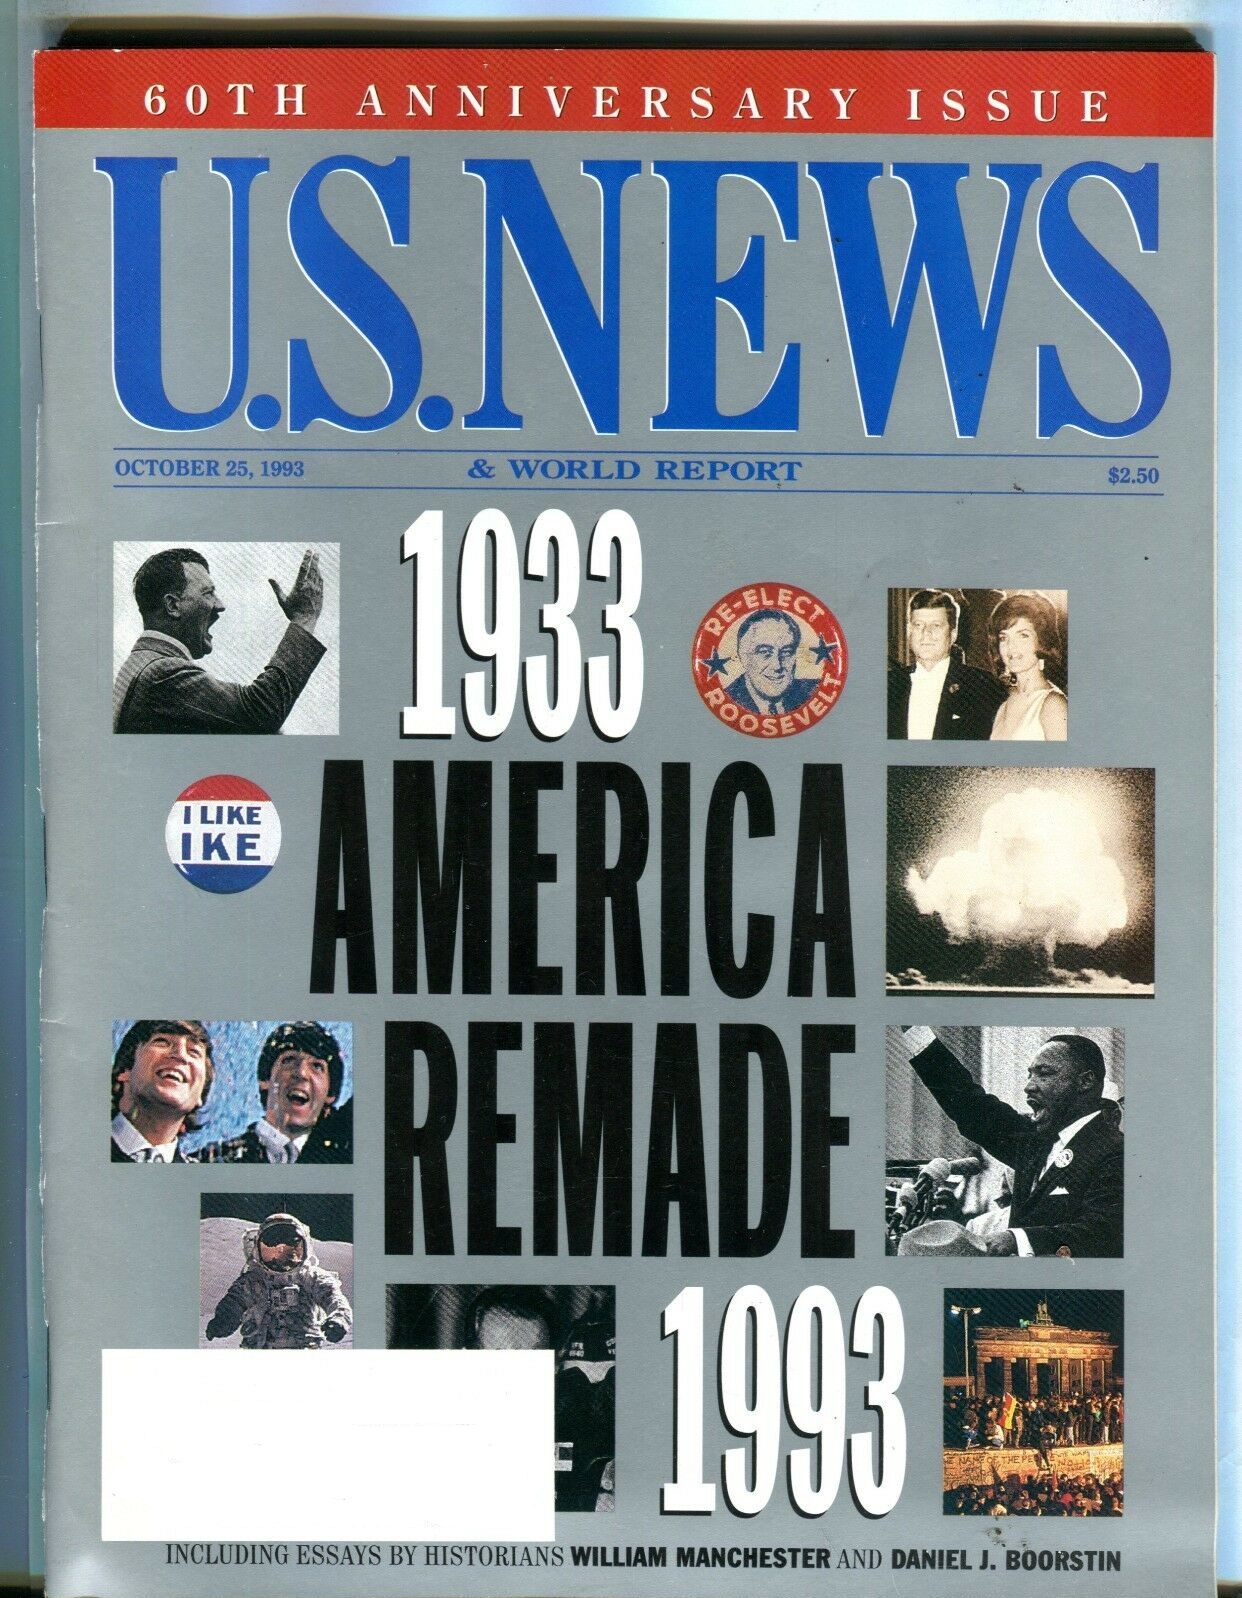 [U.S NEWS-2019-11-01-20] U.S NEWS [25-Oct-93]